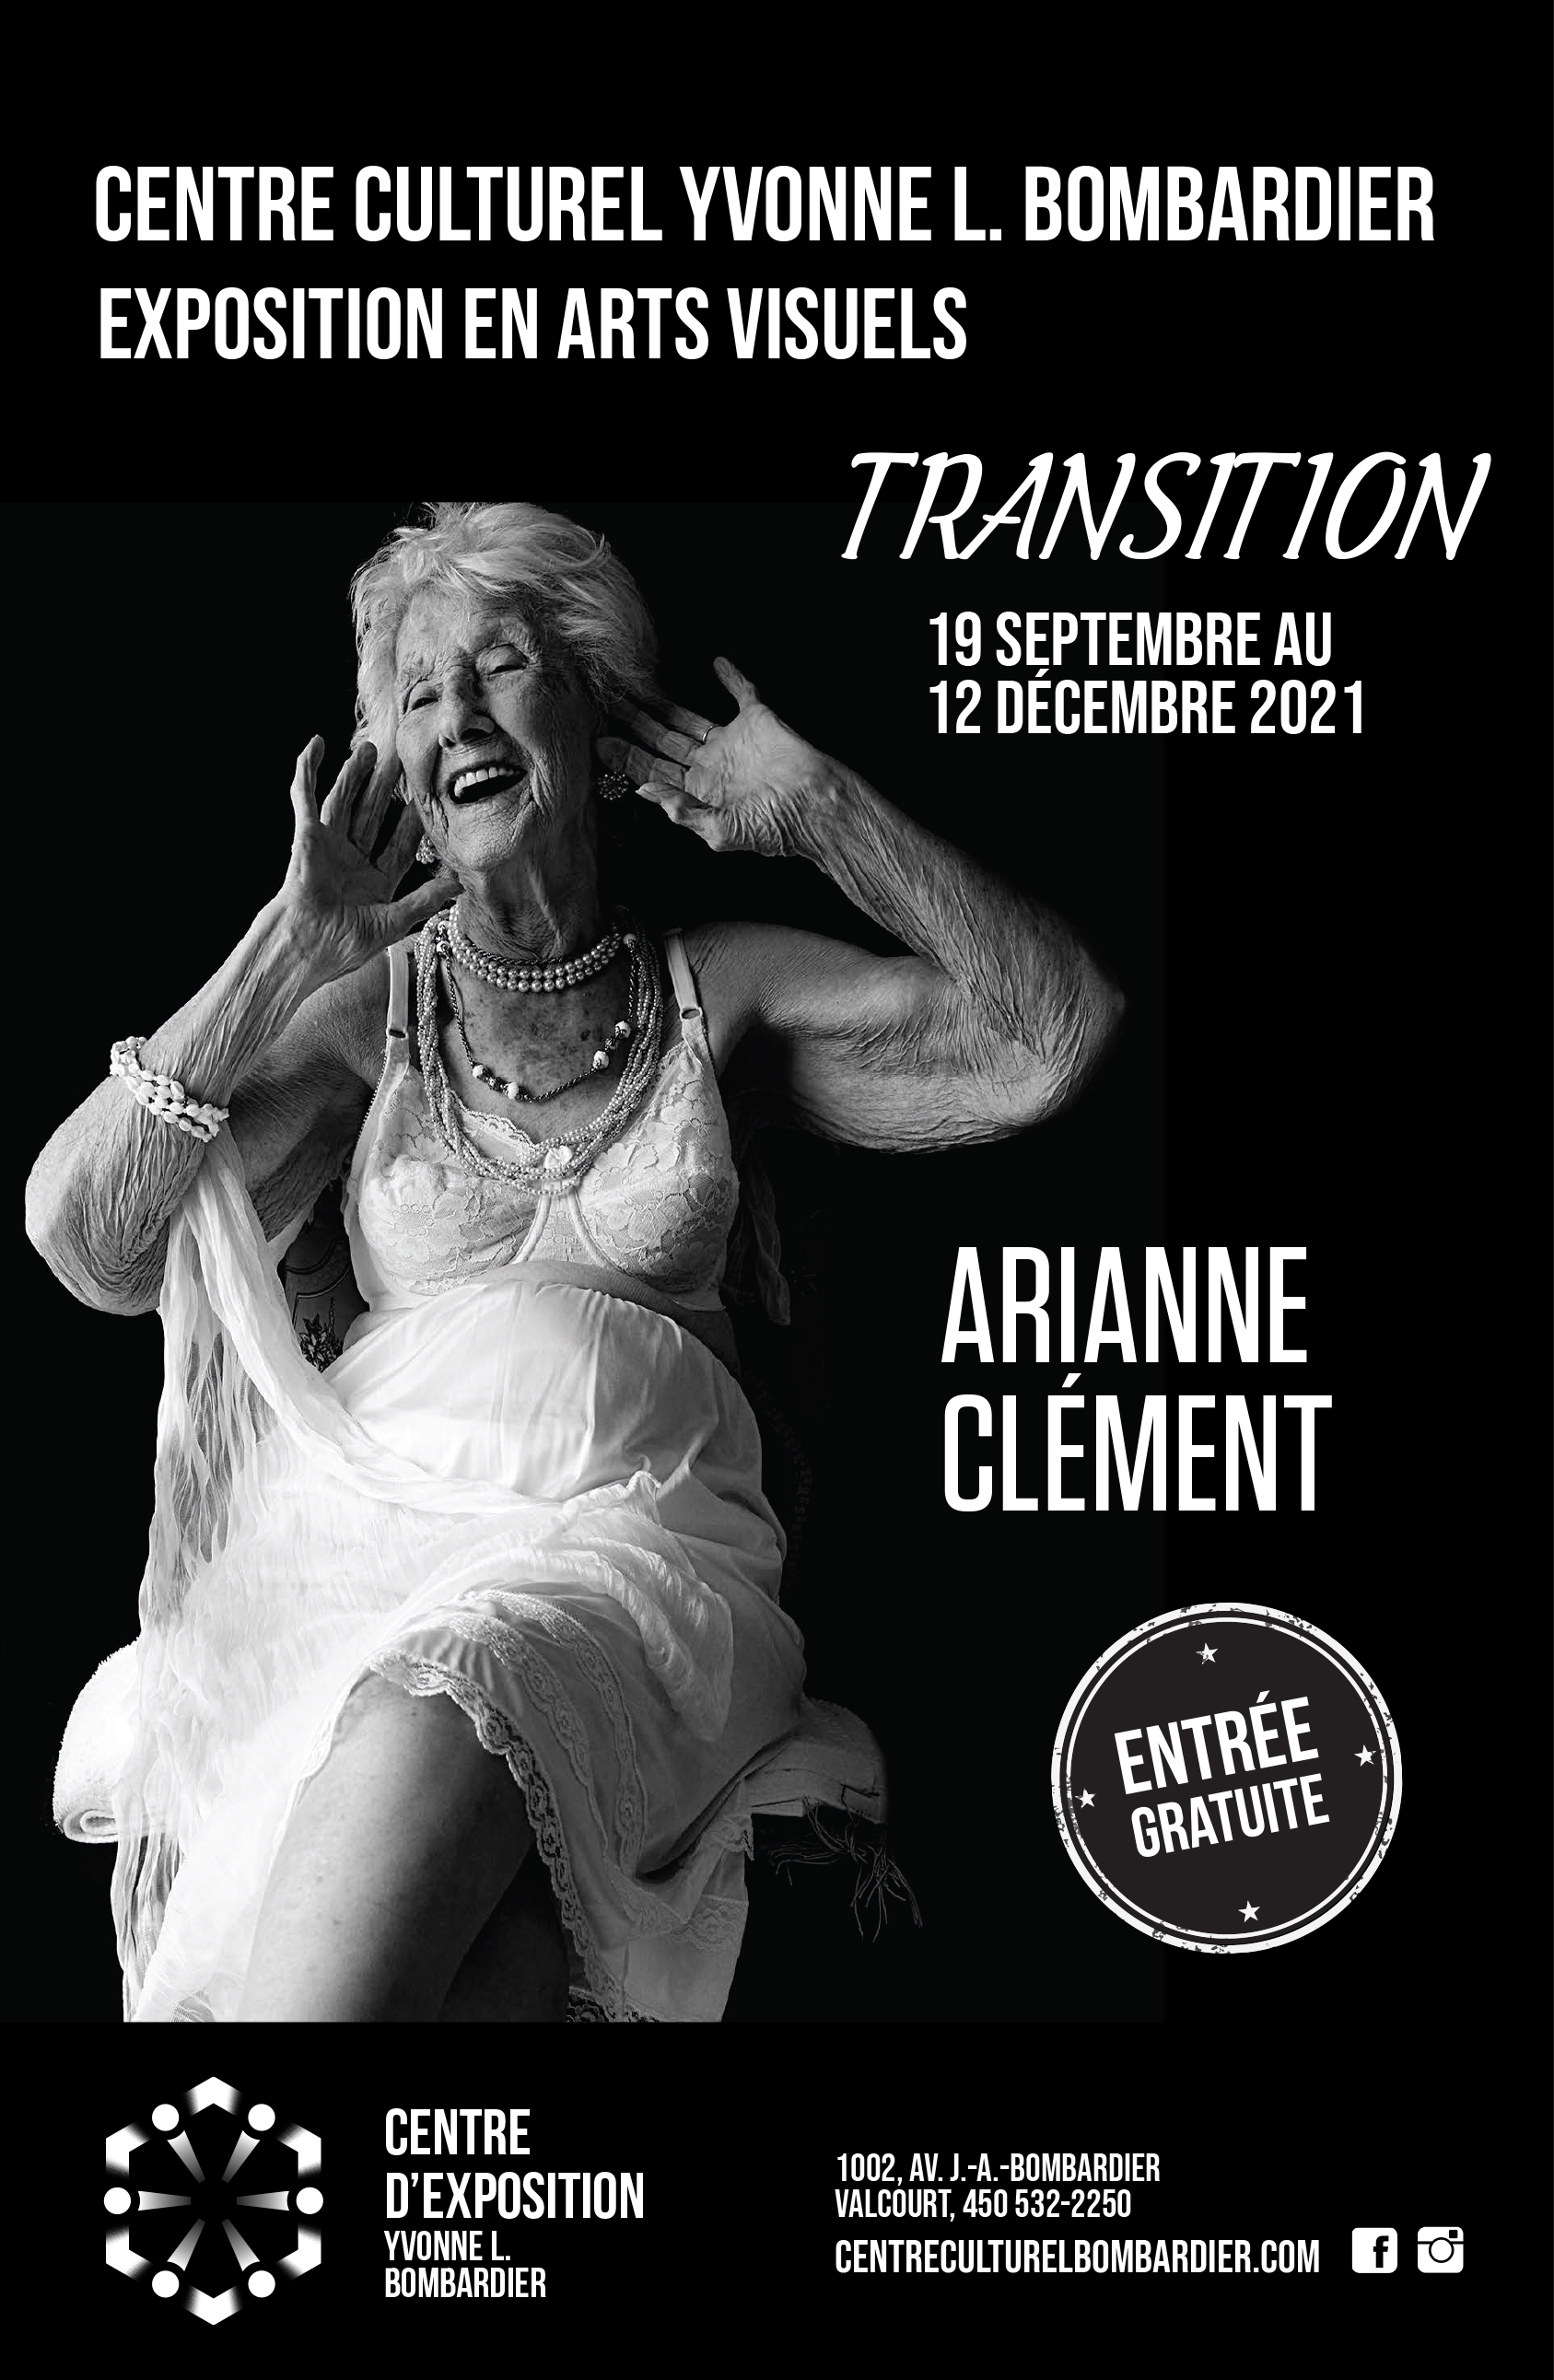 Arianne Clément